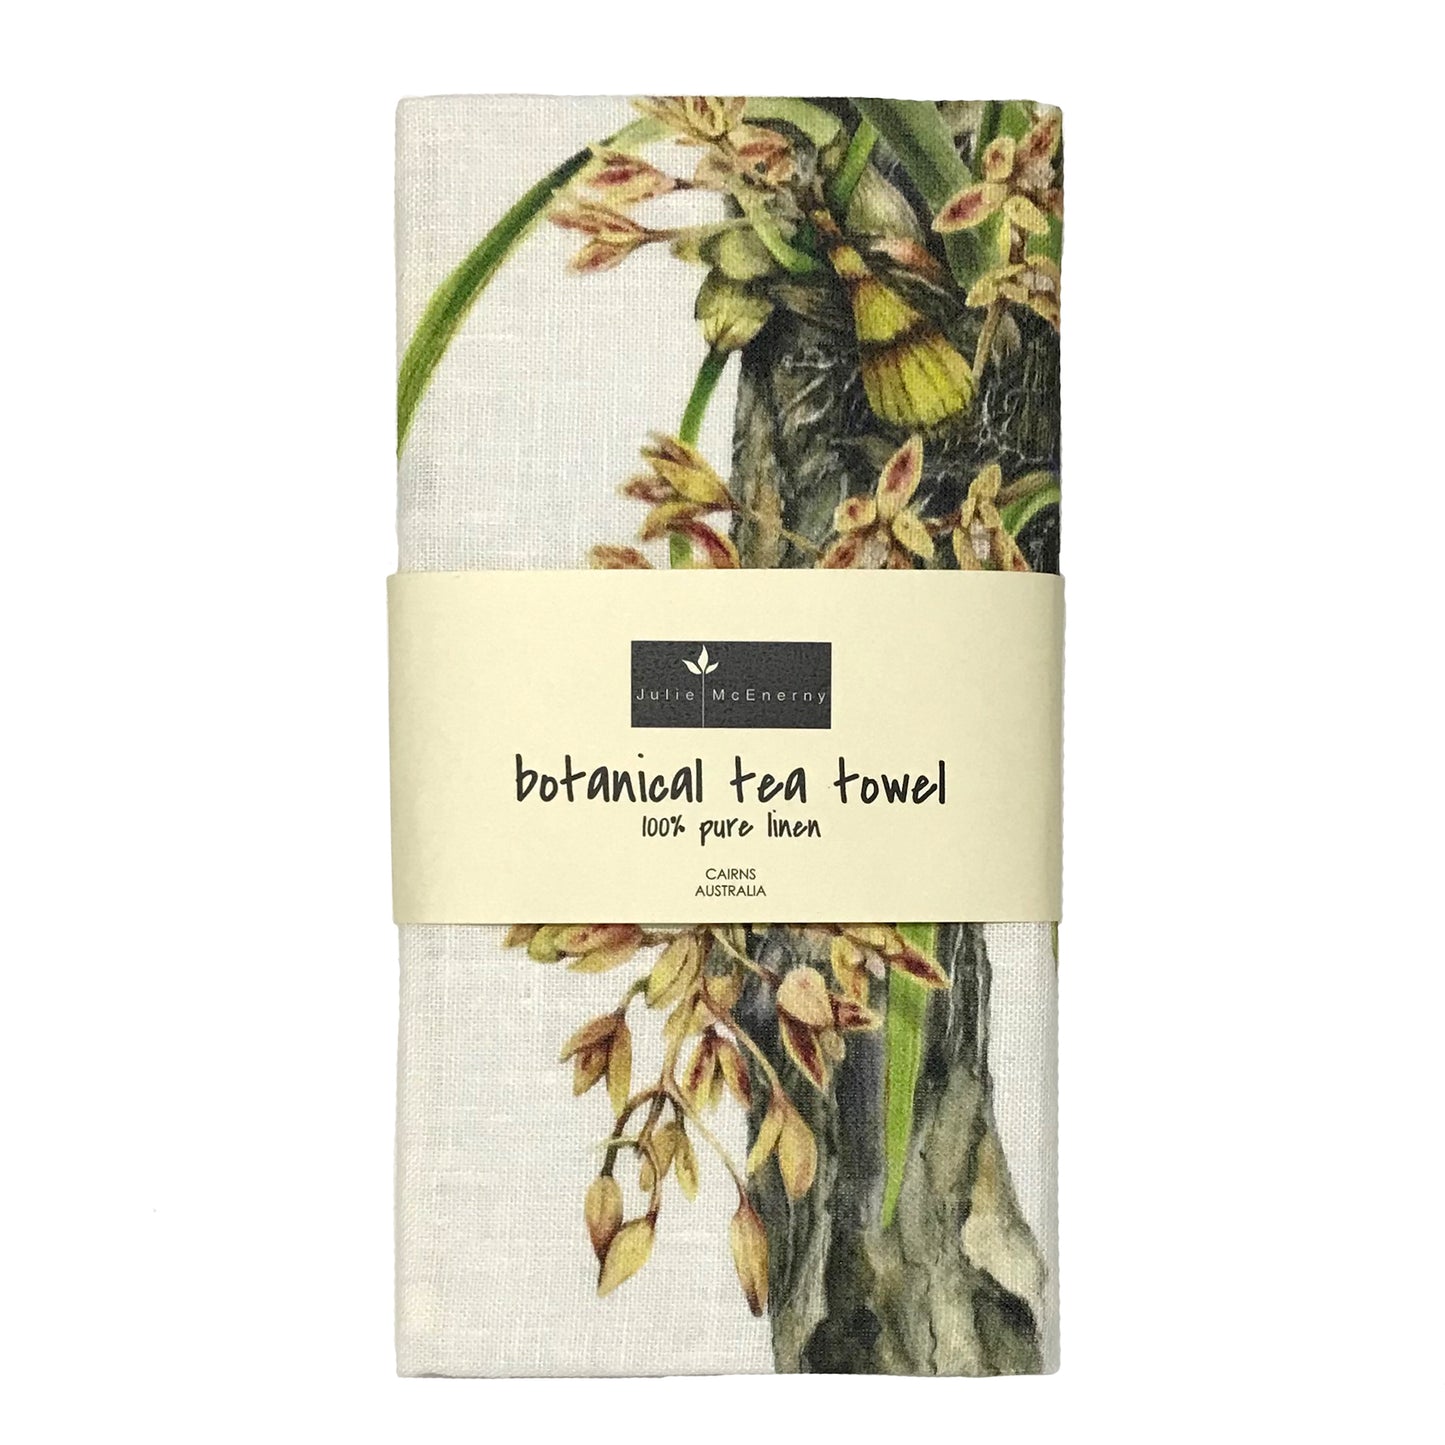 JULIE MCENERNY | ‘Native Orchid – Cymbidium canaliculation’ | Tea towel / 100% linen